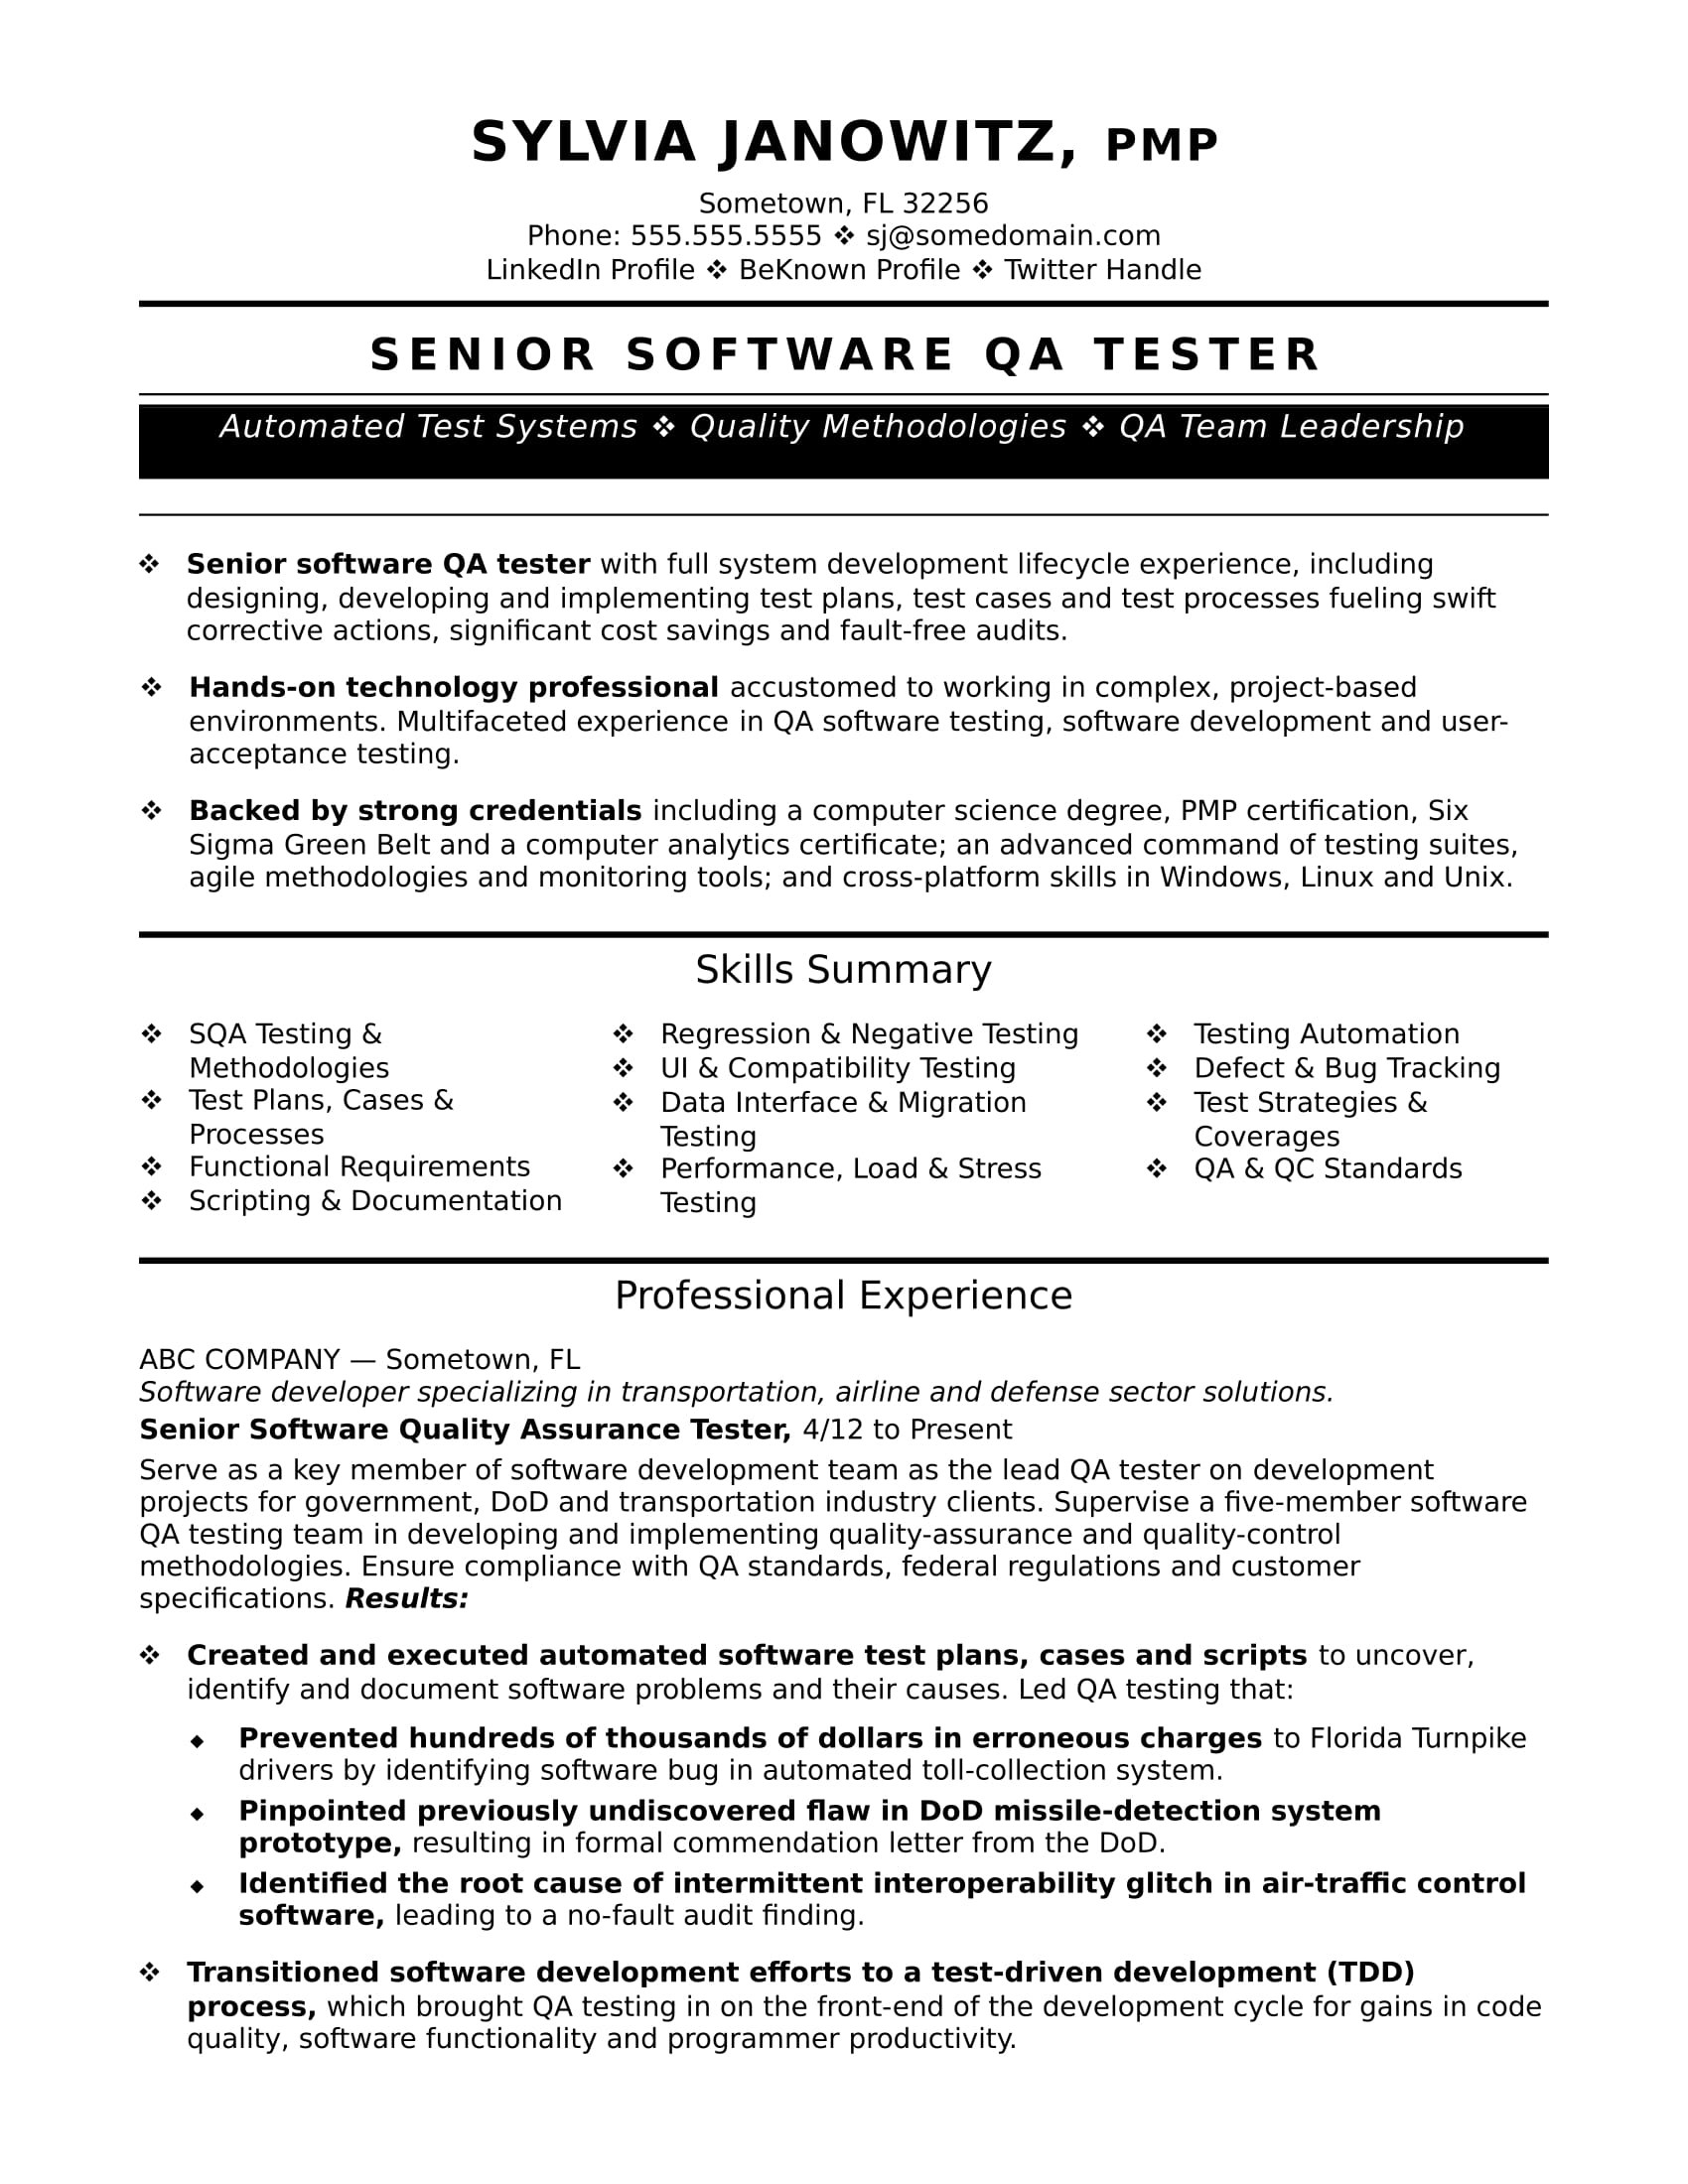 Software Quality assurance Engineer Sample Resume Experienced Qa software Tester Resume Sample Monster.com